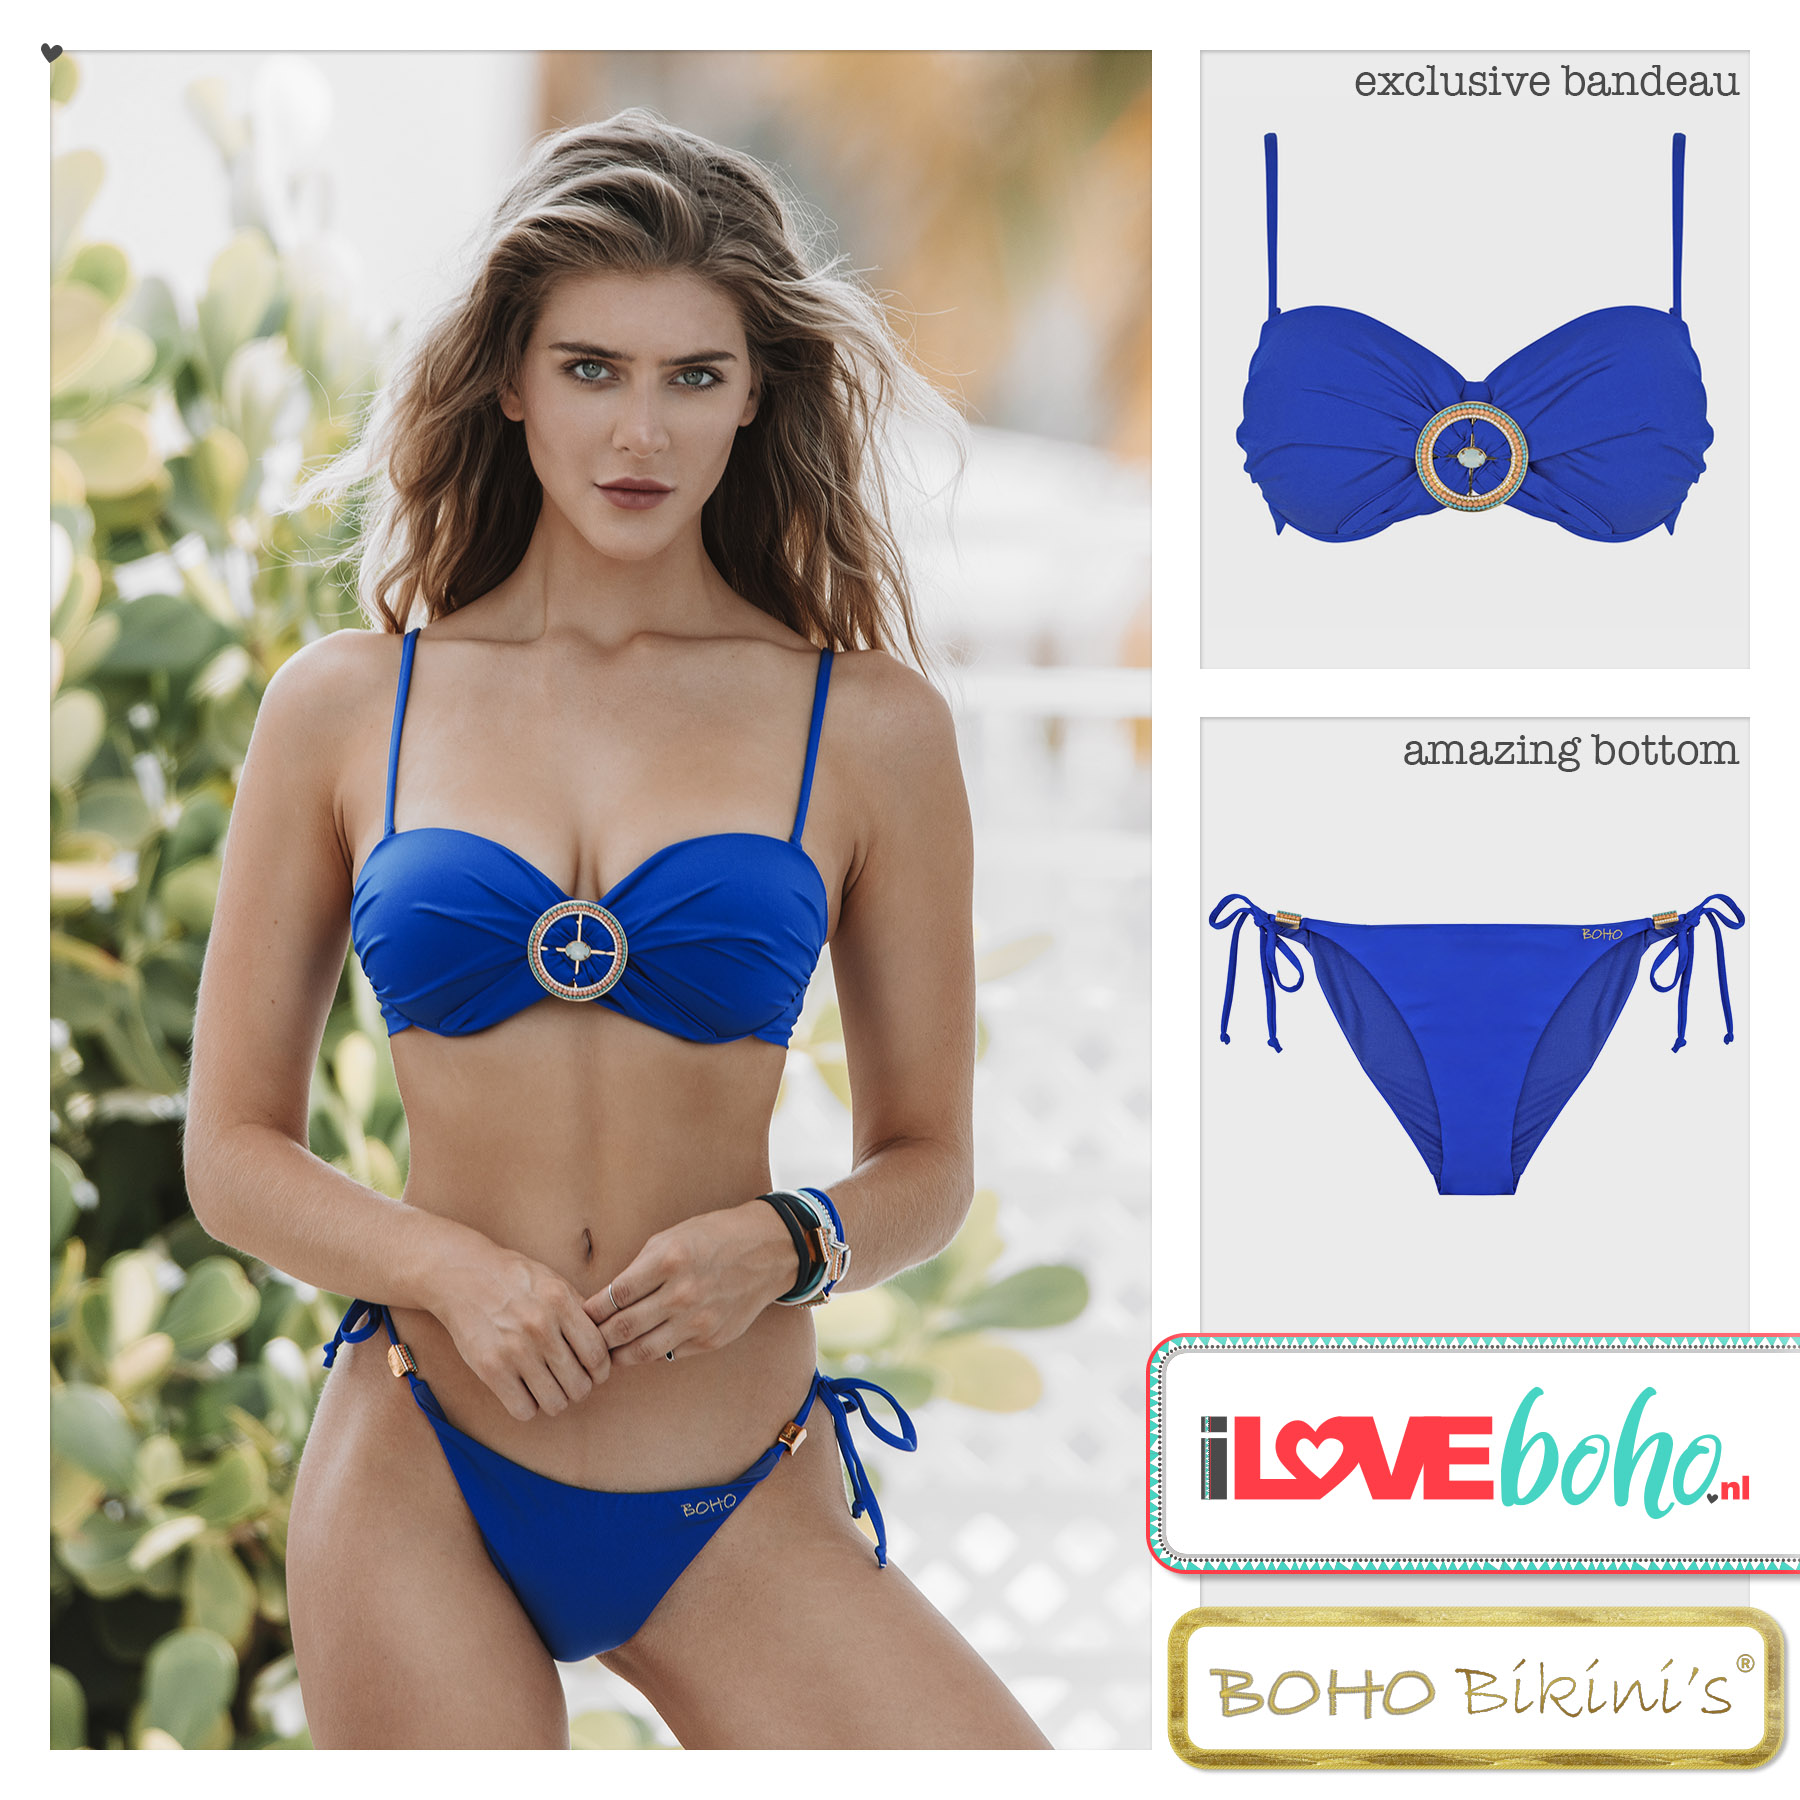 media walgelijk Fabrikant BOHO bikini top – exclusive bandeau – lapiz blauw - s/m/l/xl - I Love BOHO